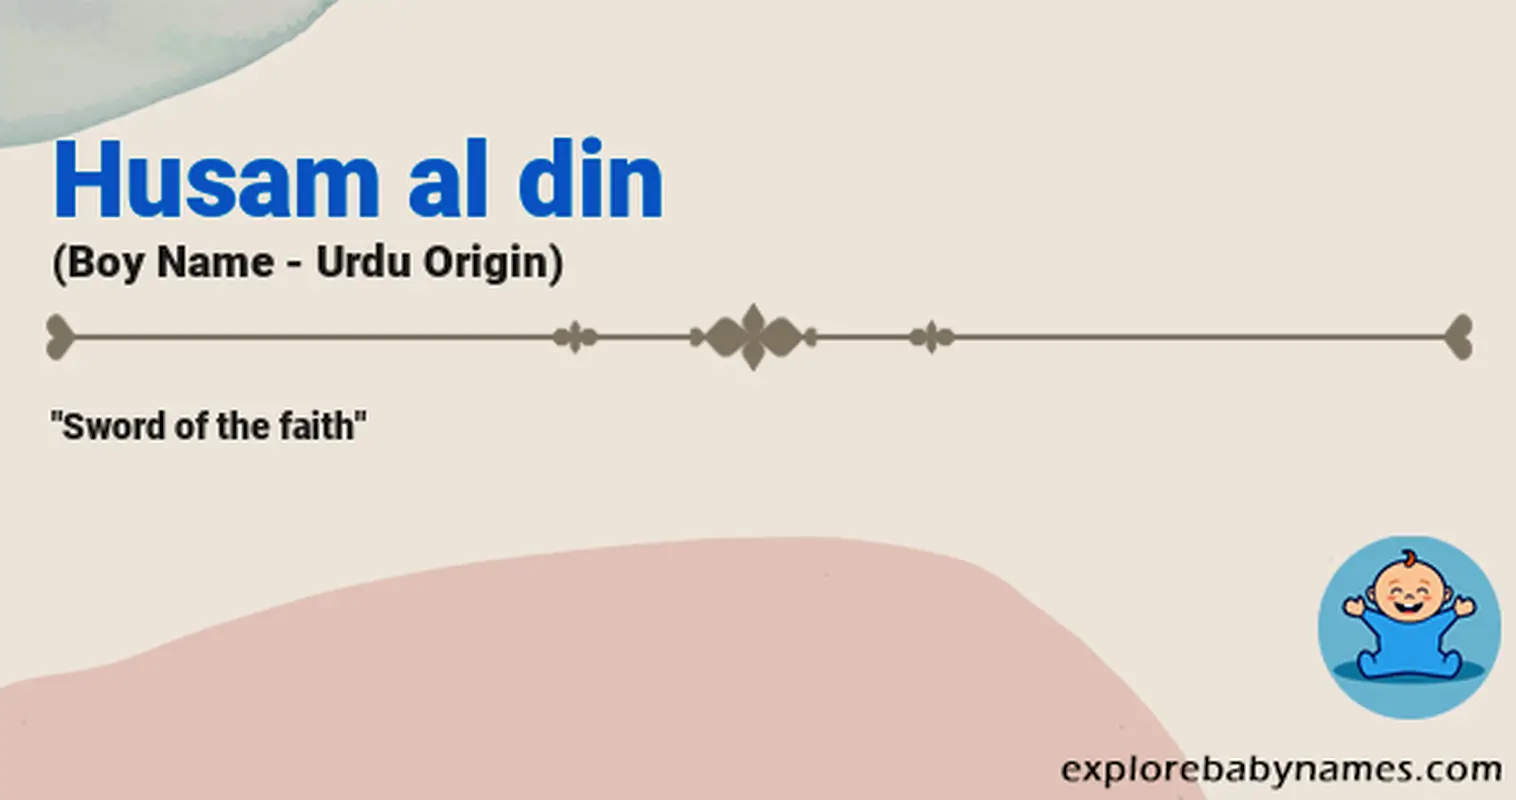 Meaning of Husam al din